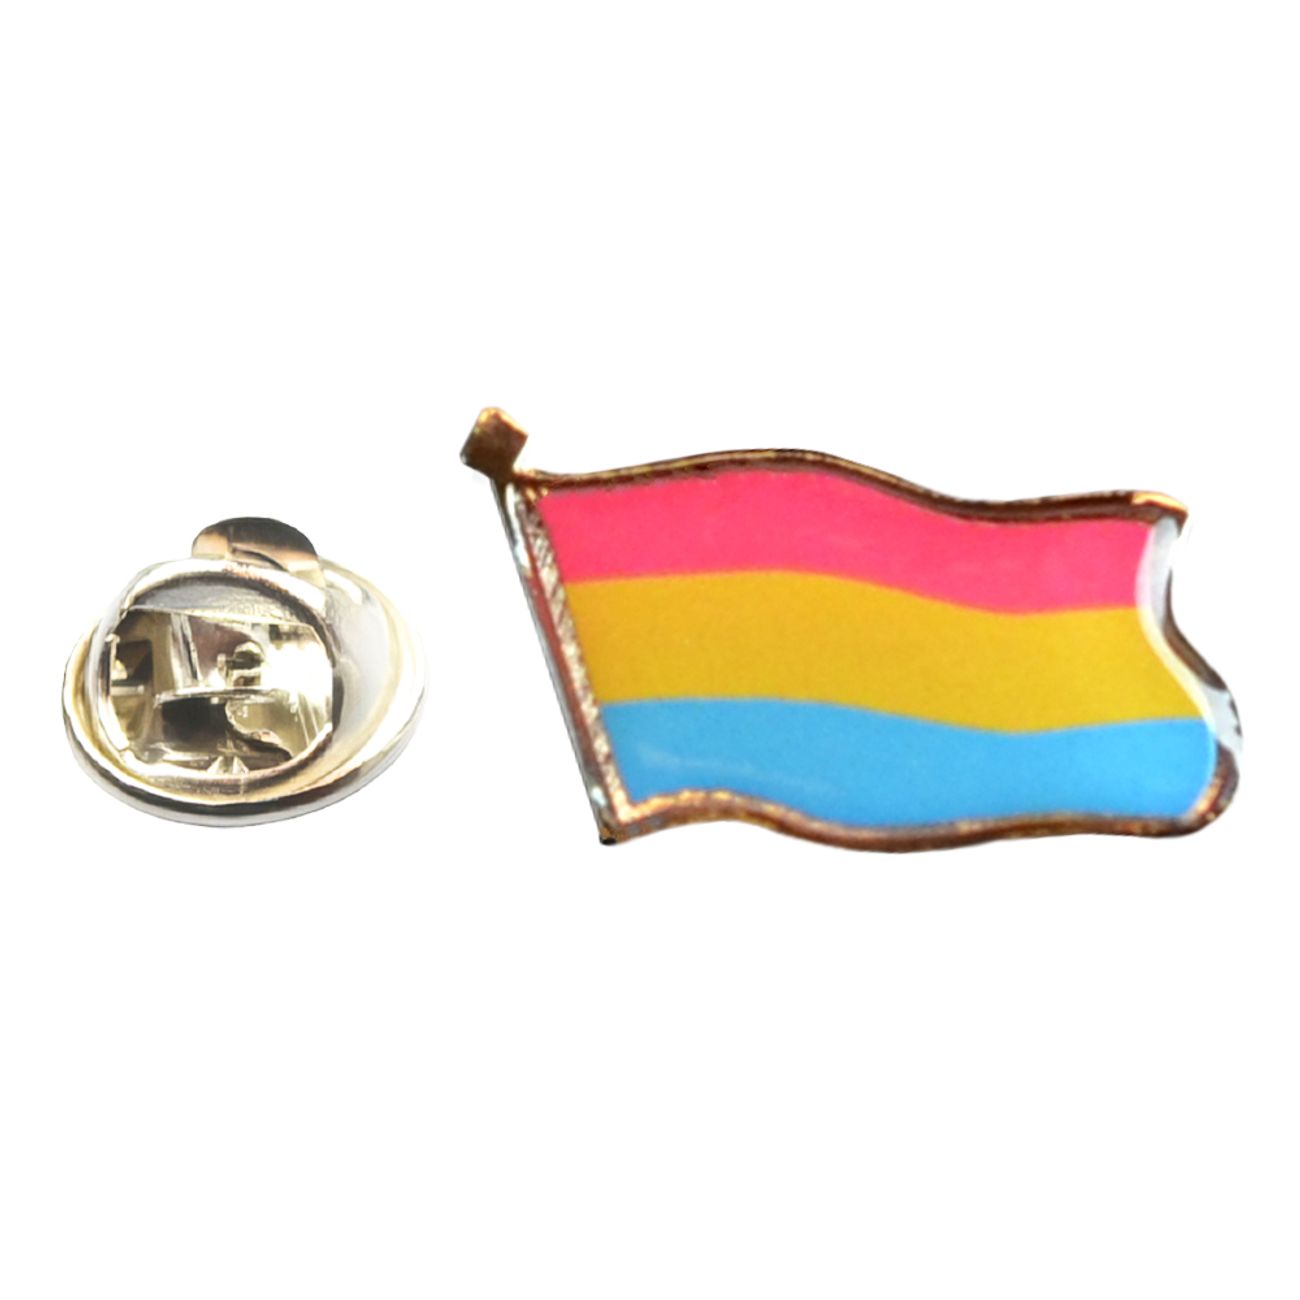 pinflagga-pride-pansexuell-96112-2